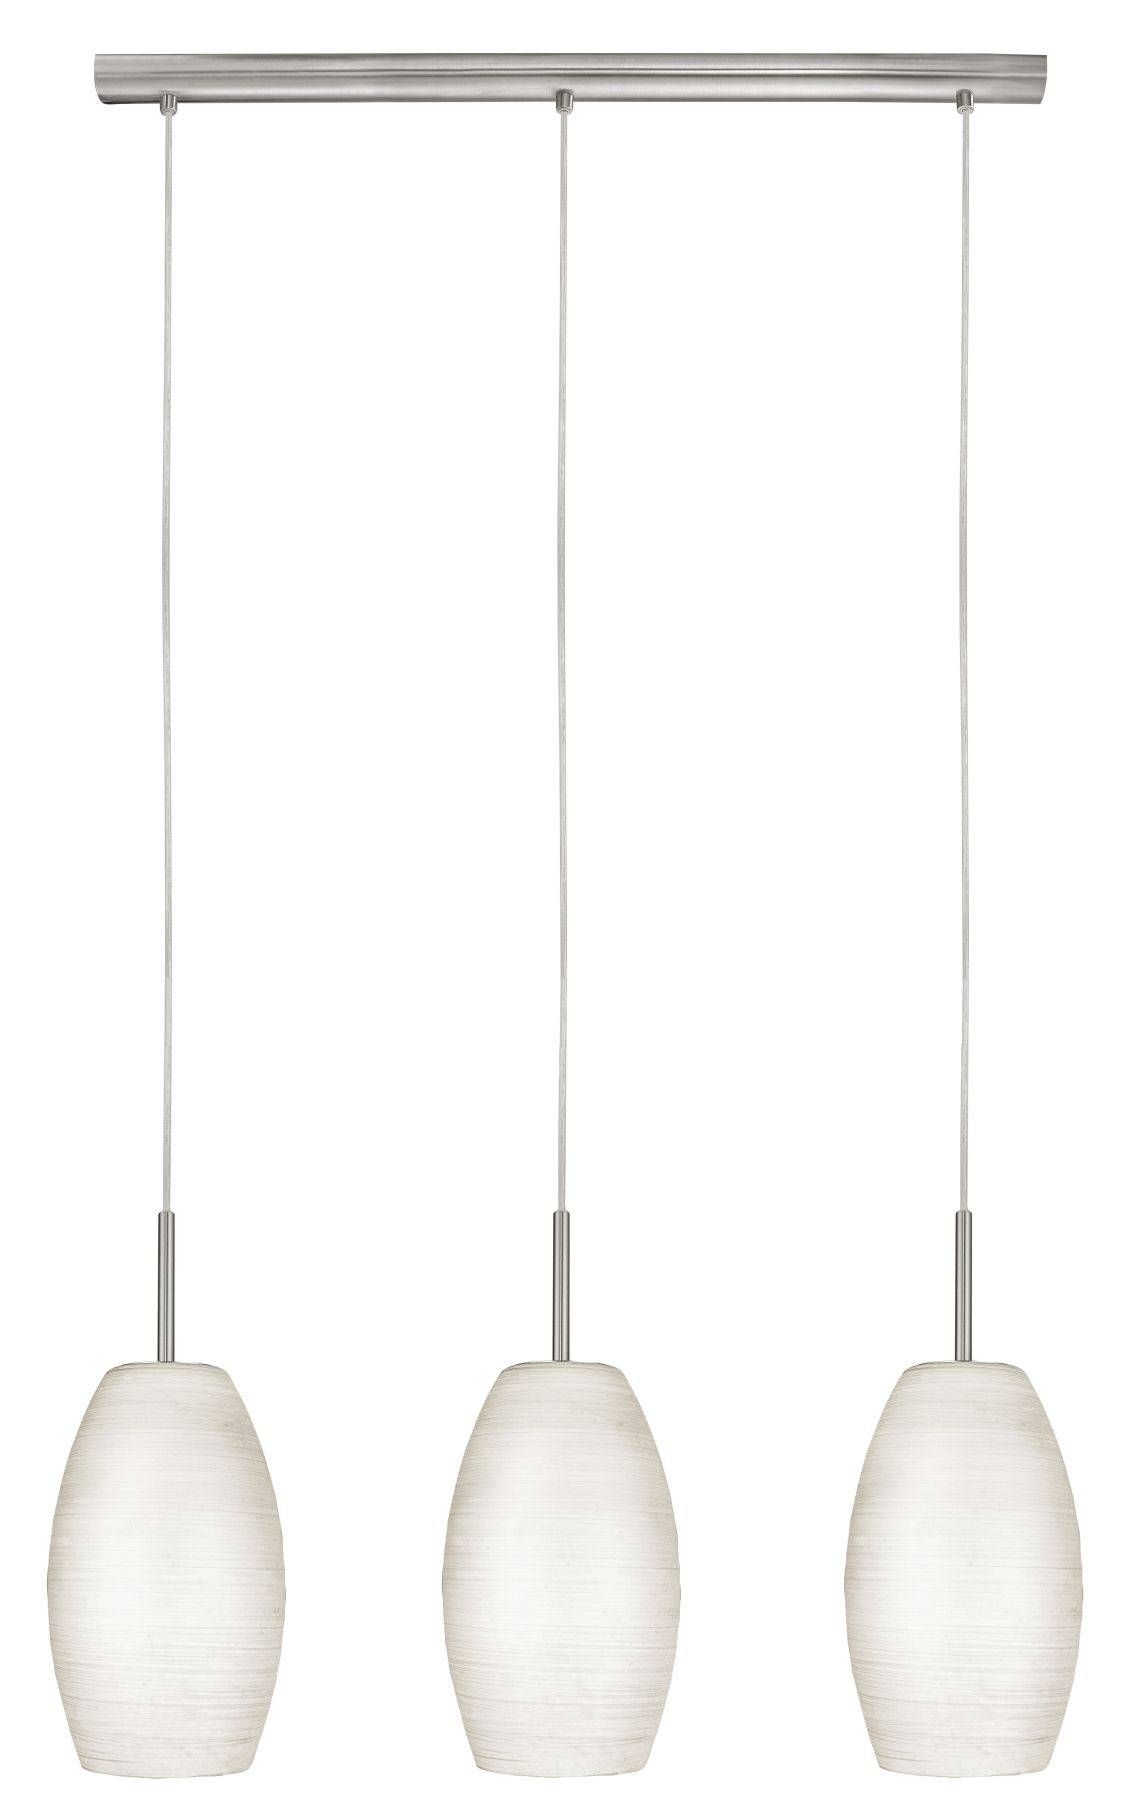 Pendant Lighting: Hanging Light Fixtures Sample Ideas Hanging In Commercial Hanging Lights Fixtures (View 5 of 15)